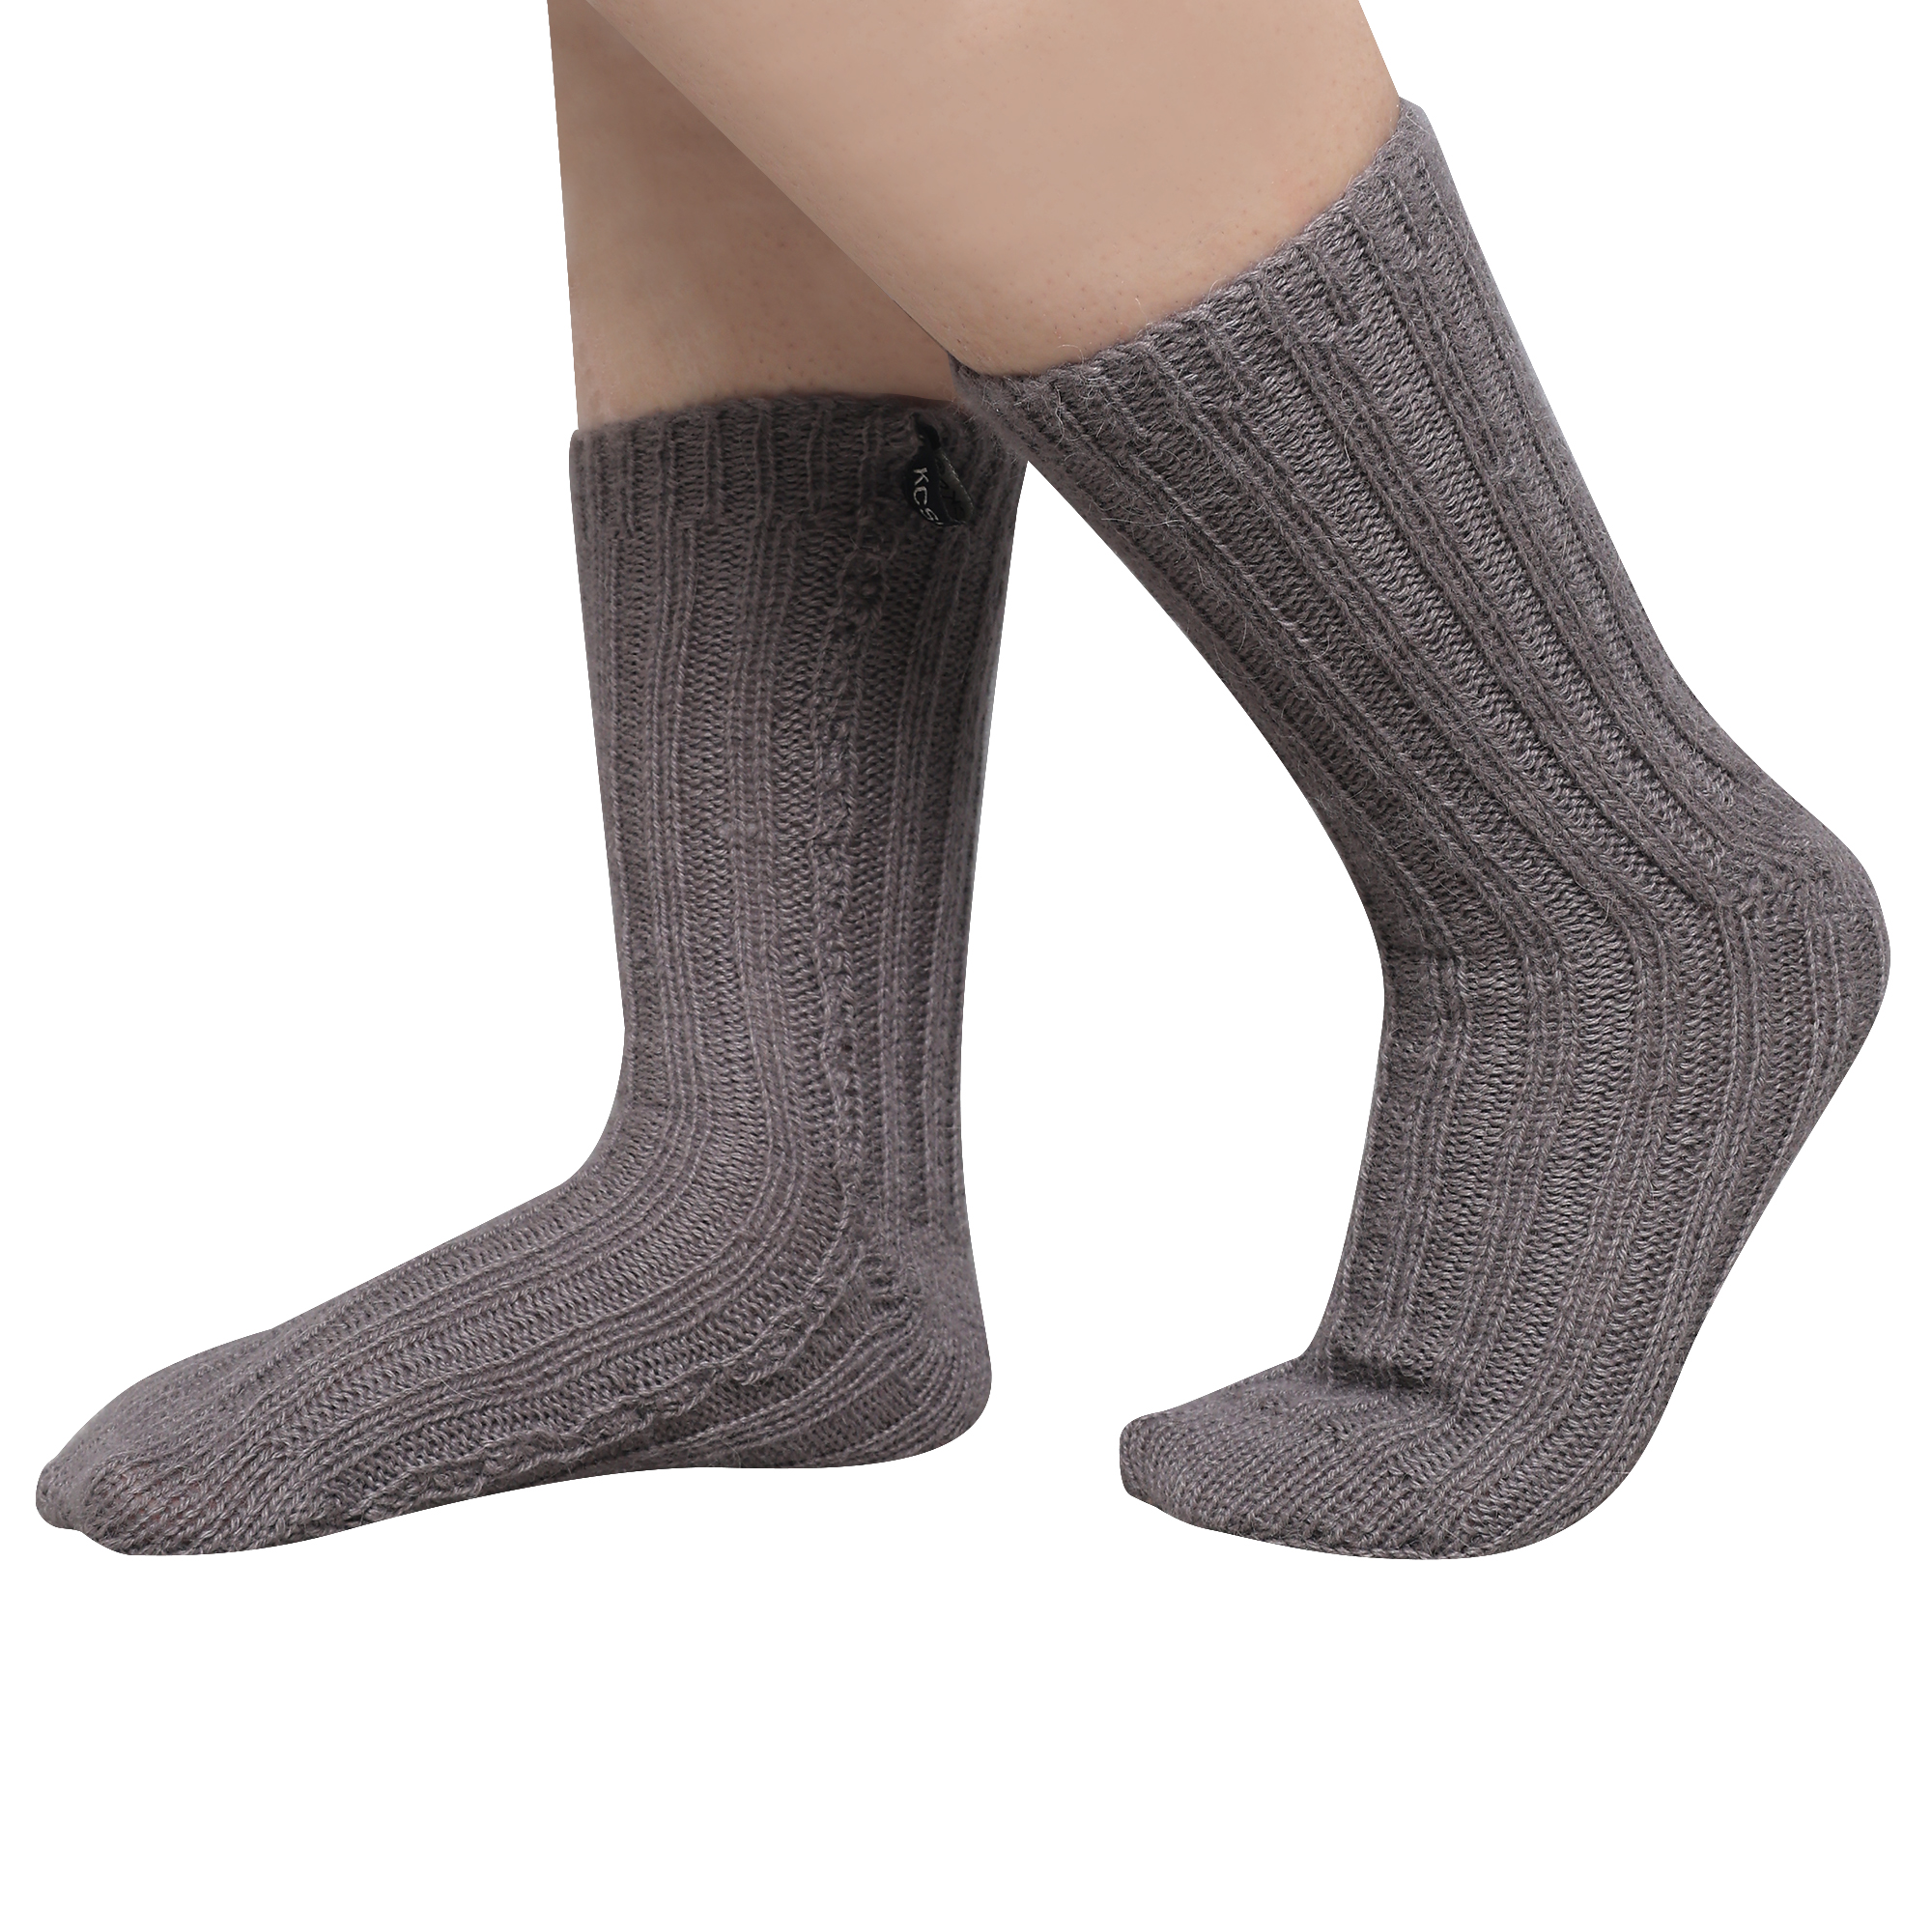 100% PURE BABY ALPACA WOOL Socks for women KCBAL301